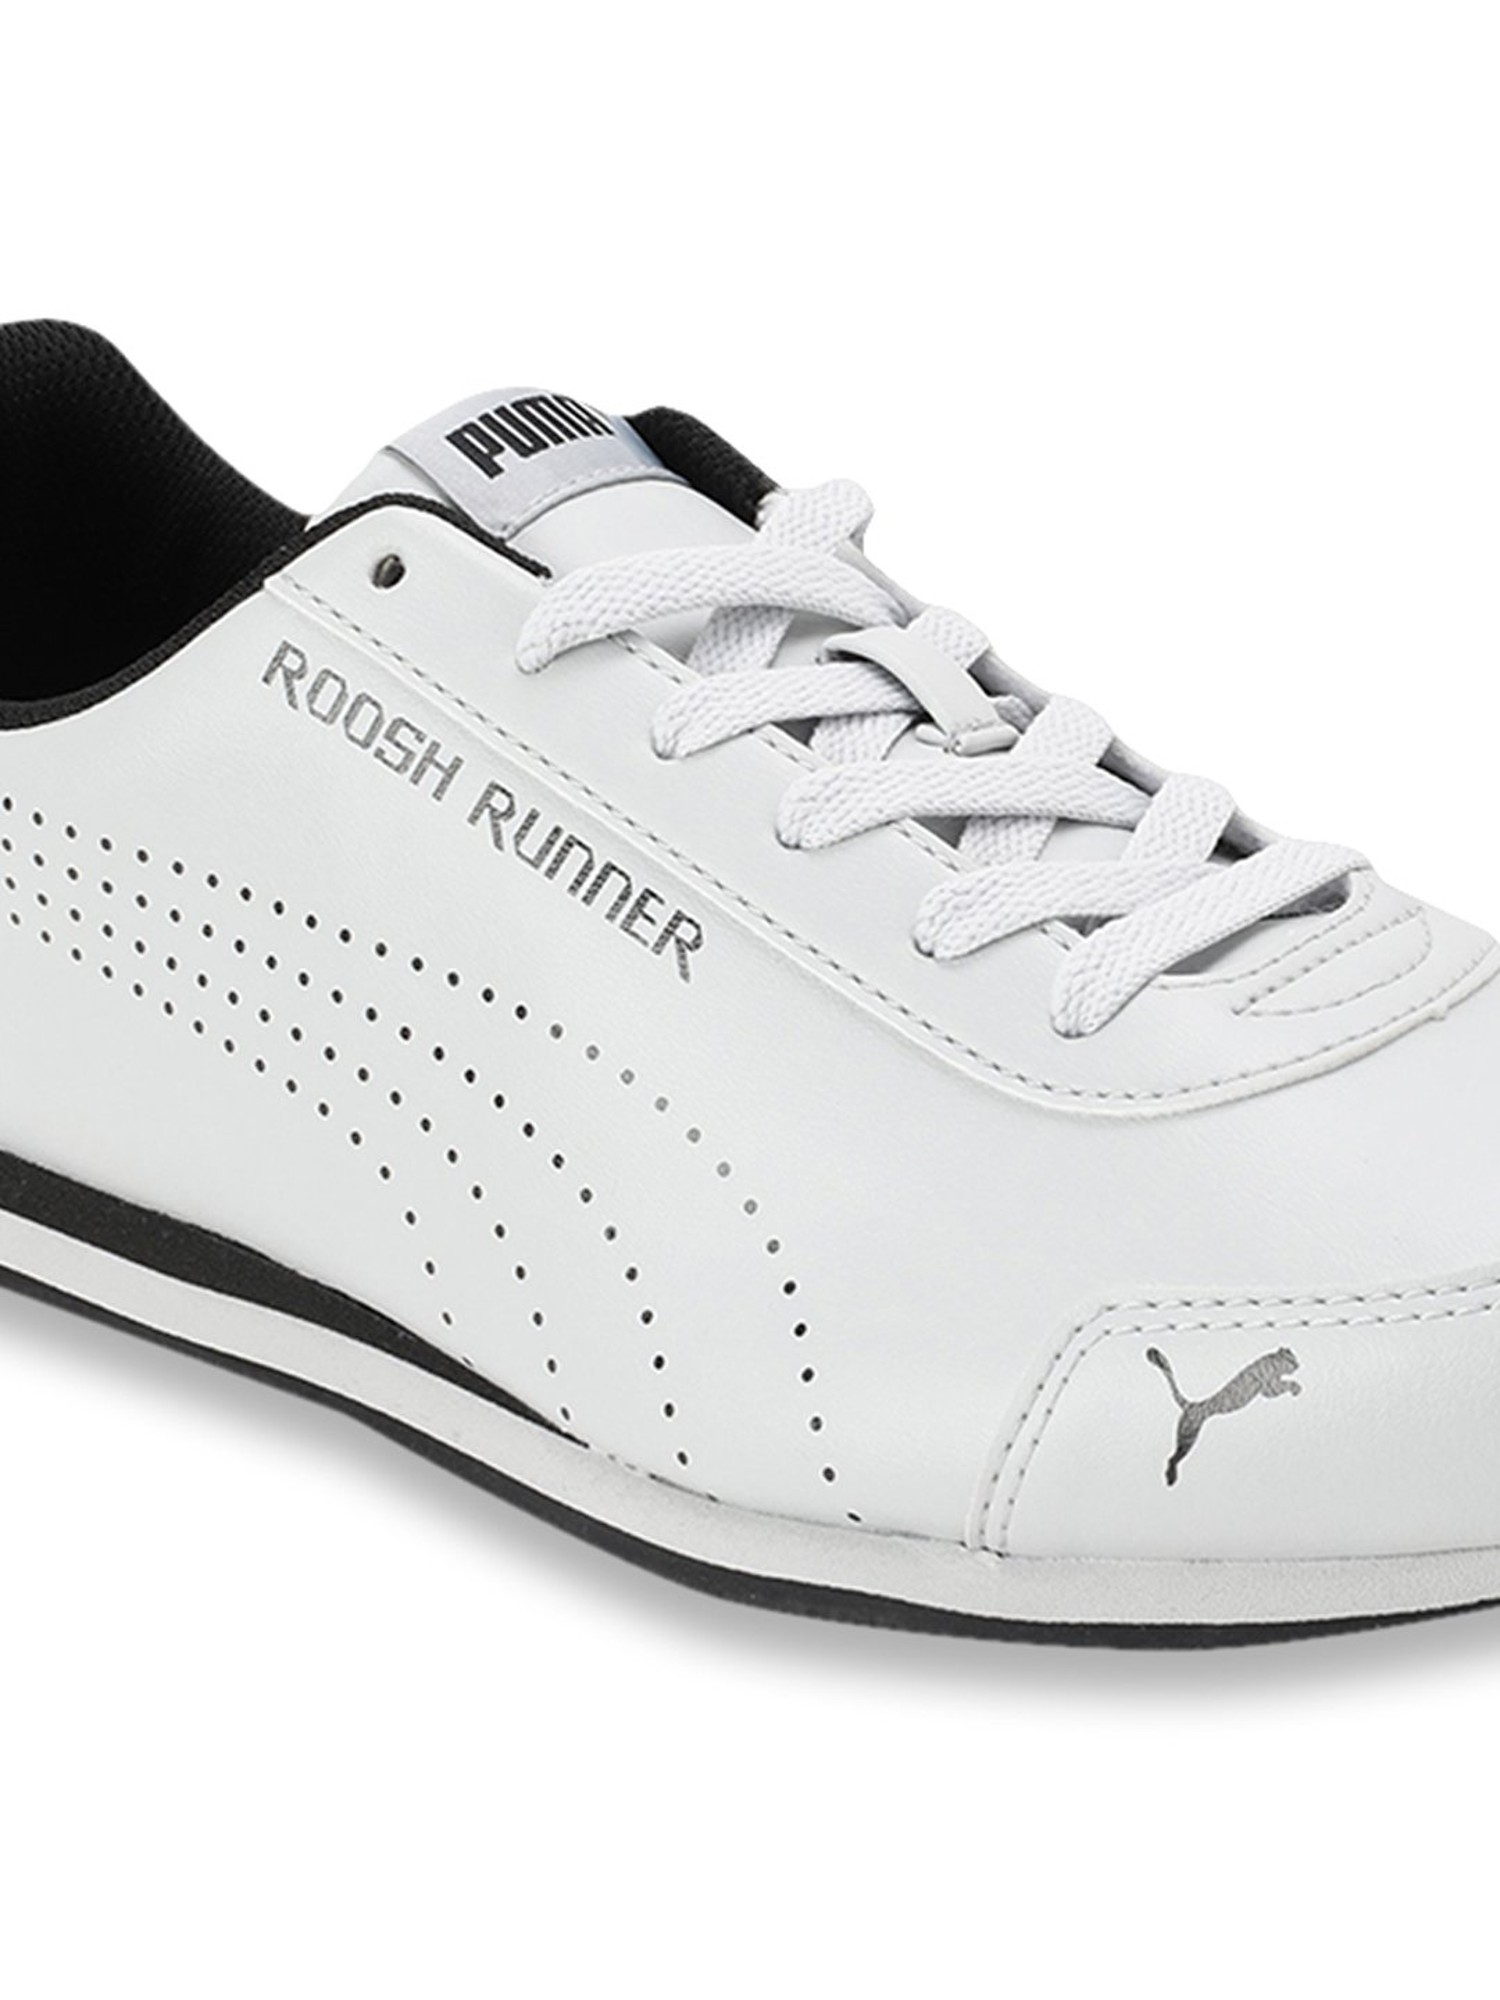 puma roosh runner shoes